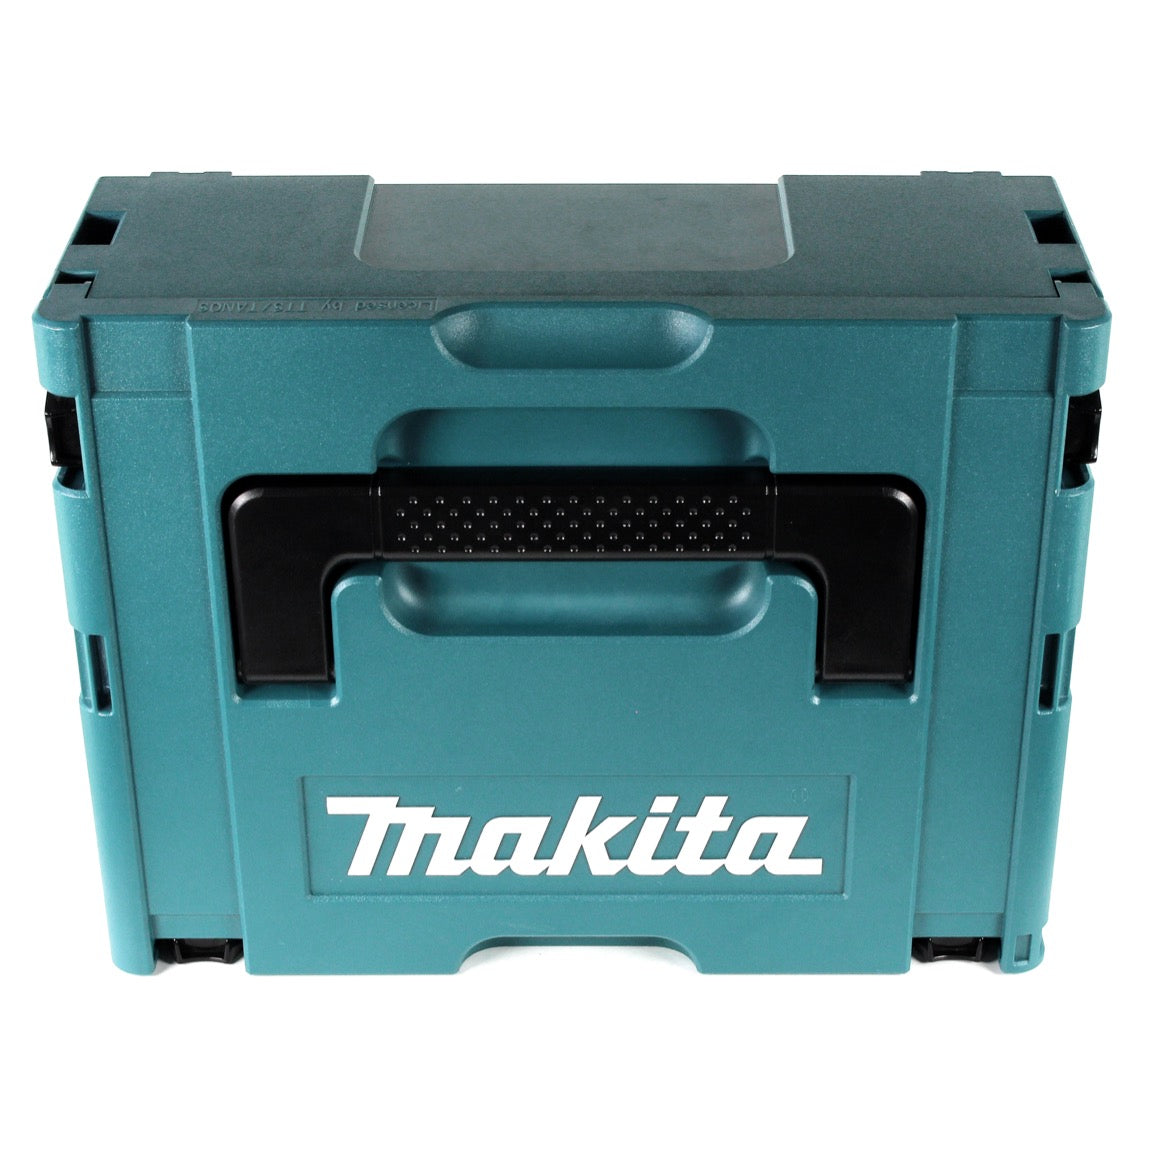 Makita DGA 511 RT1J Akku Winkelschleifer 18V 125mm Brushless + 1x Akku 5,0Ah + Ladegerät + Makpac - Toolbrothers